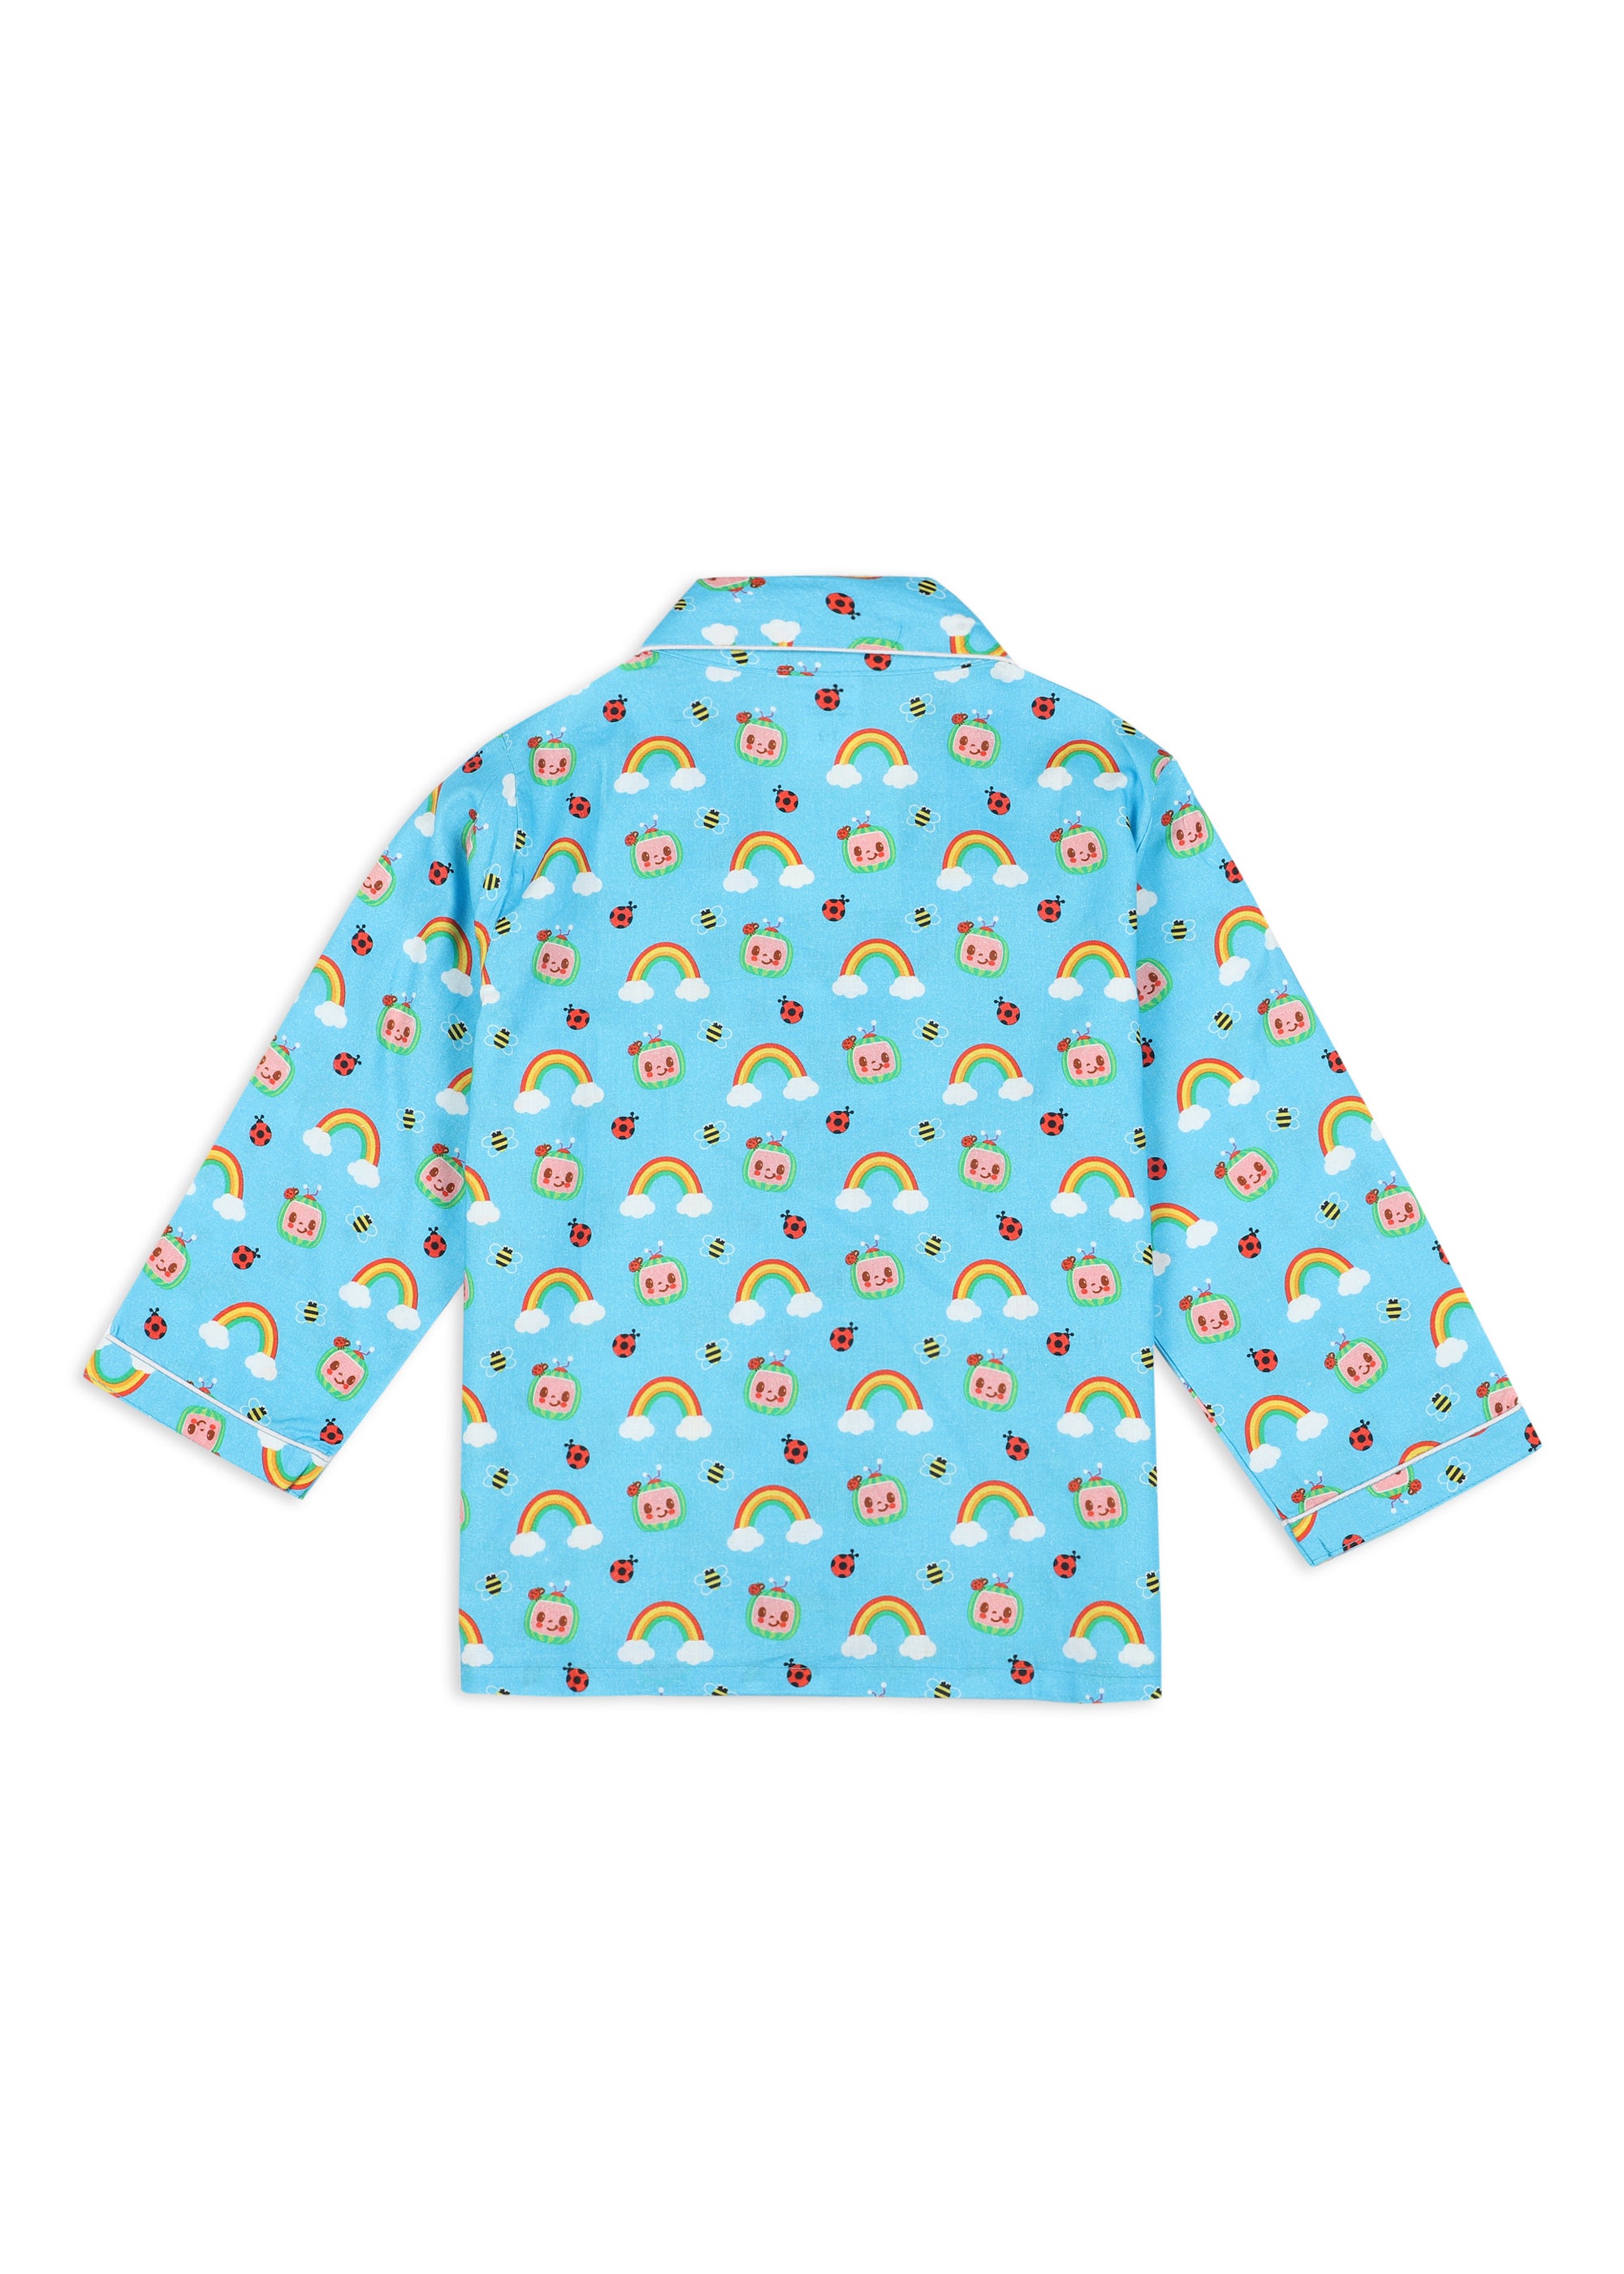 CoComelon Rainbow Print Long Sleeve Kids Night Suit - Shopbloom